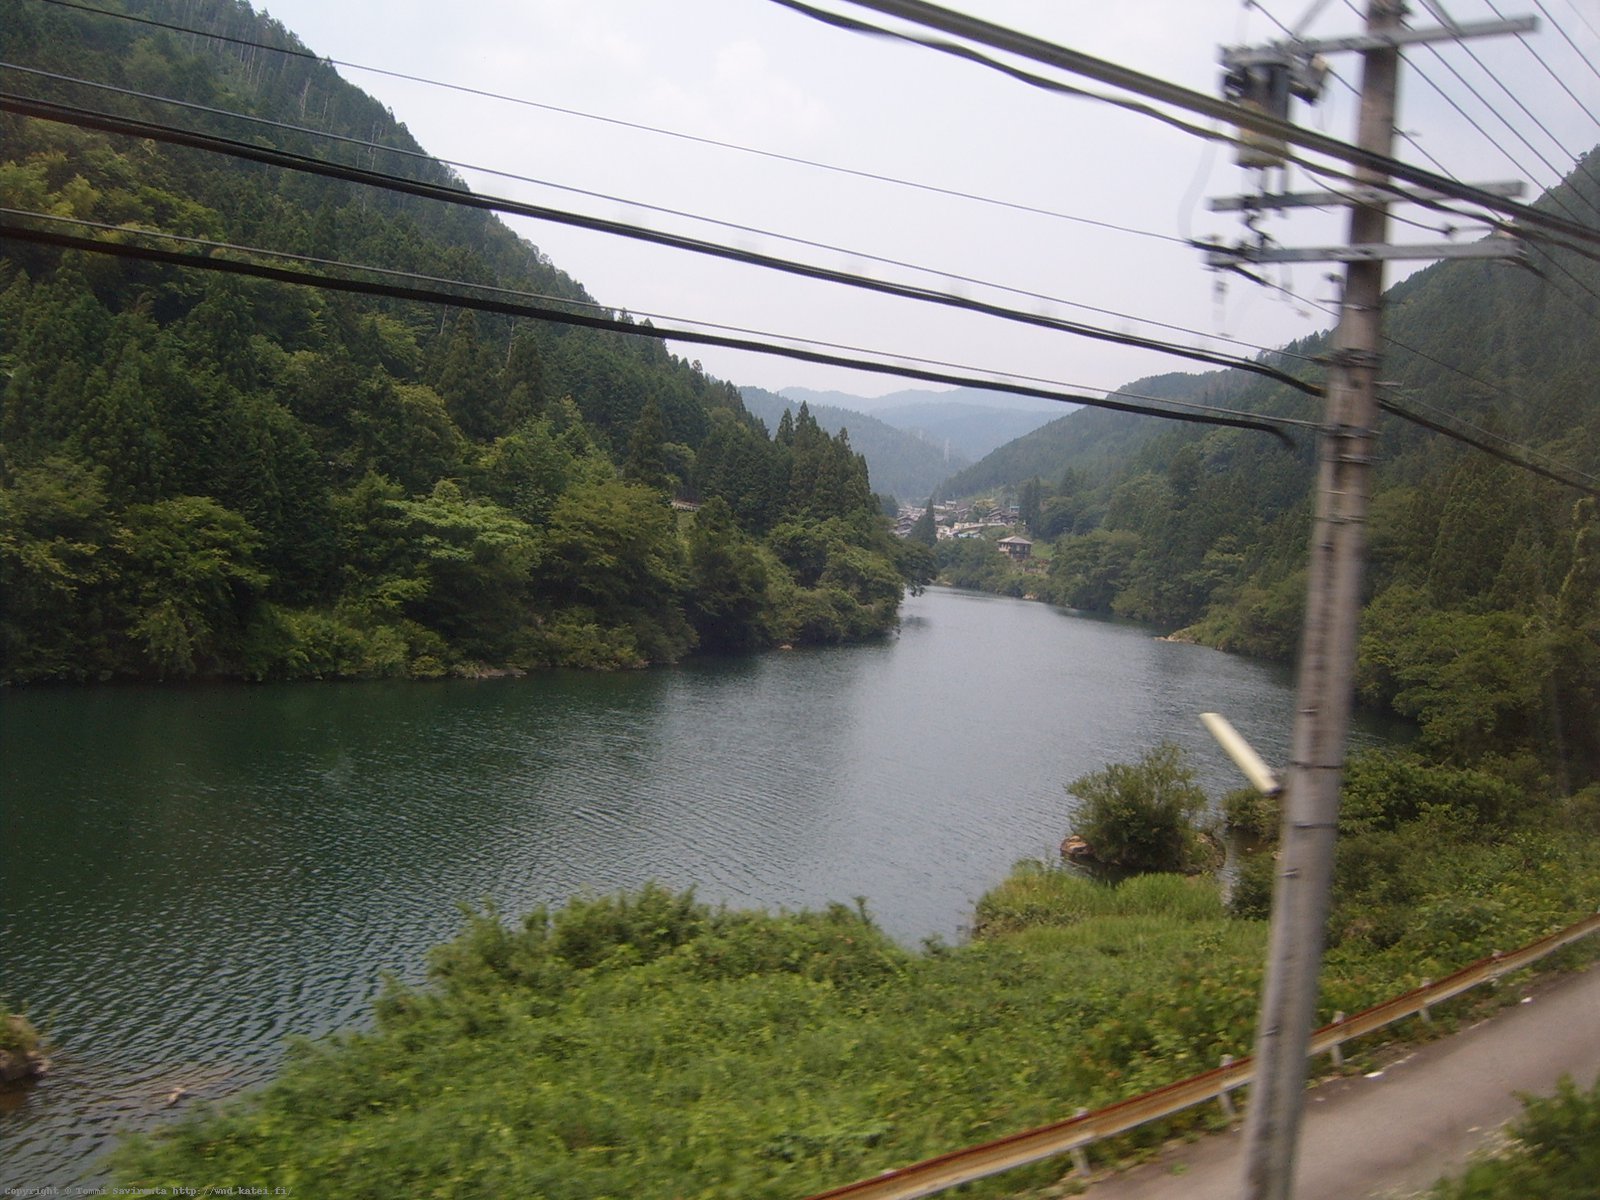 Day #8: Alps between Nagoya and Takayama